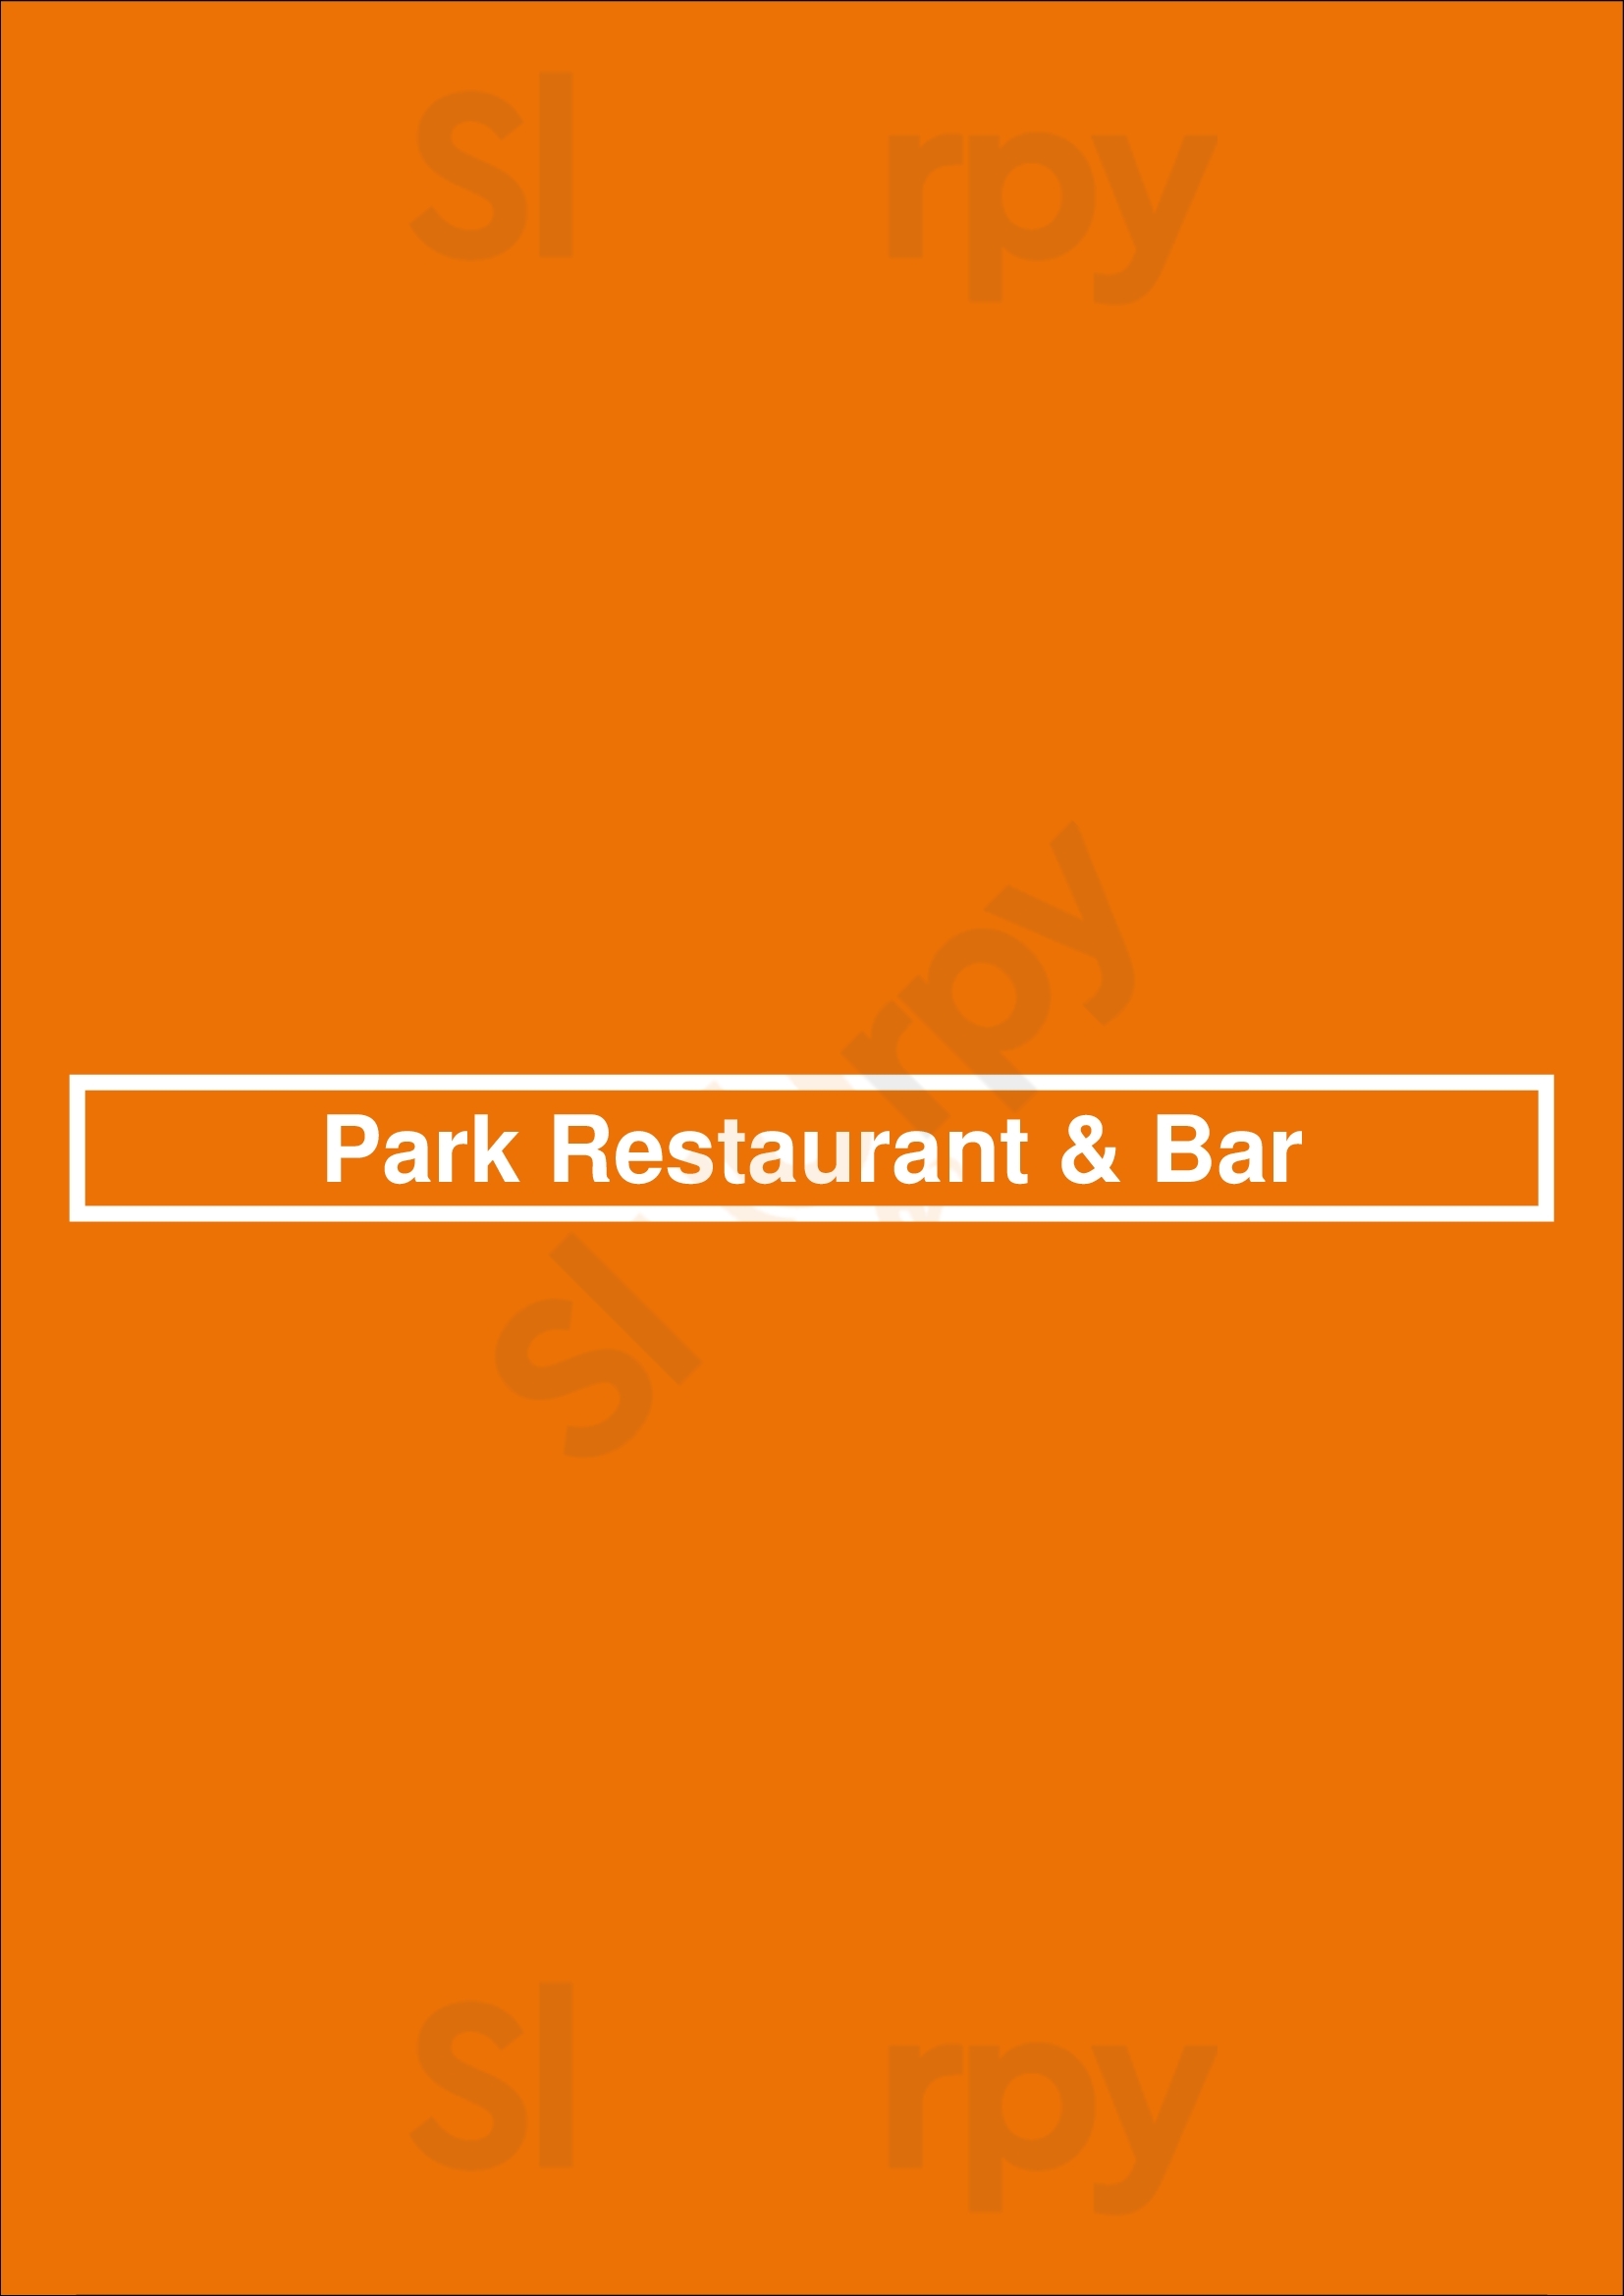 Park Restaurant & Bar Columbia Menu - 1